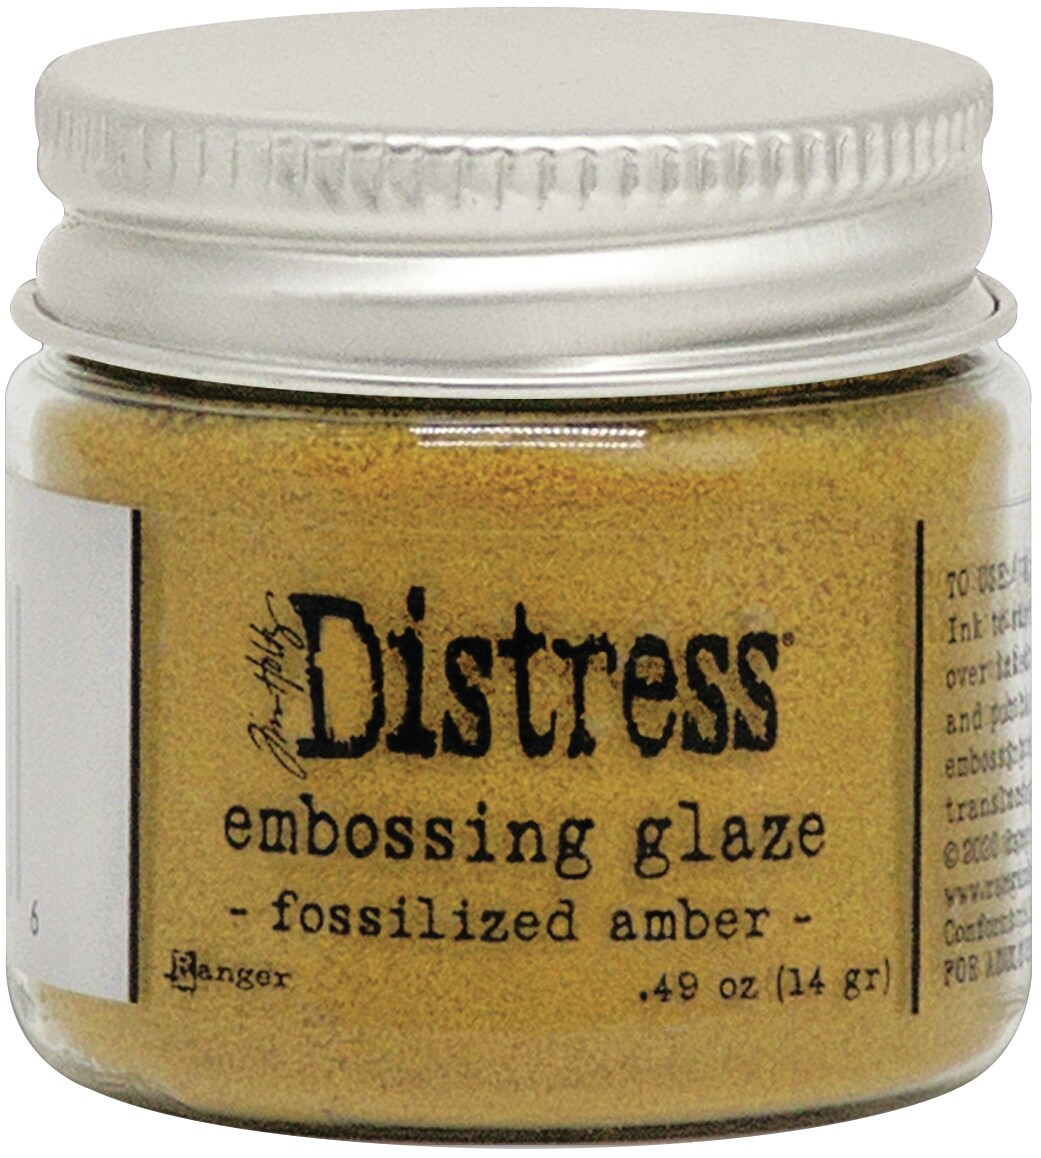 Tim Holtz Distress Embossing Glaze -Fossilized Amber